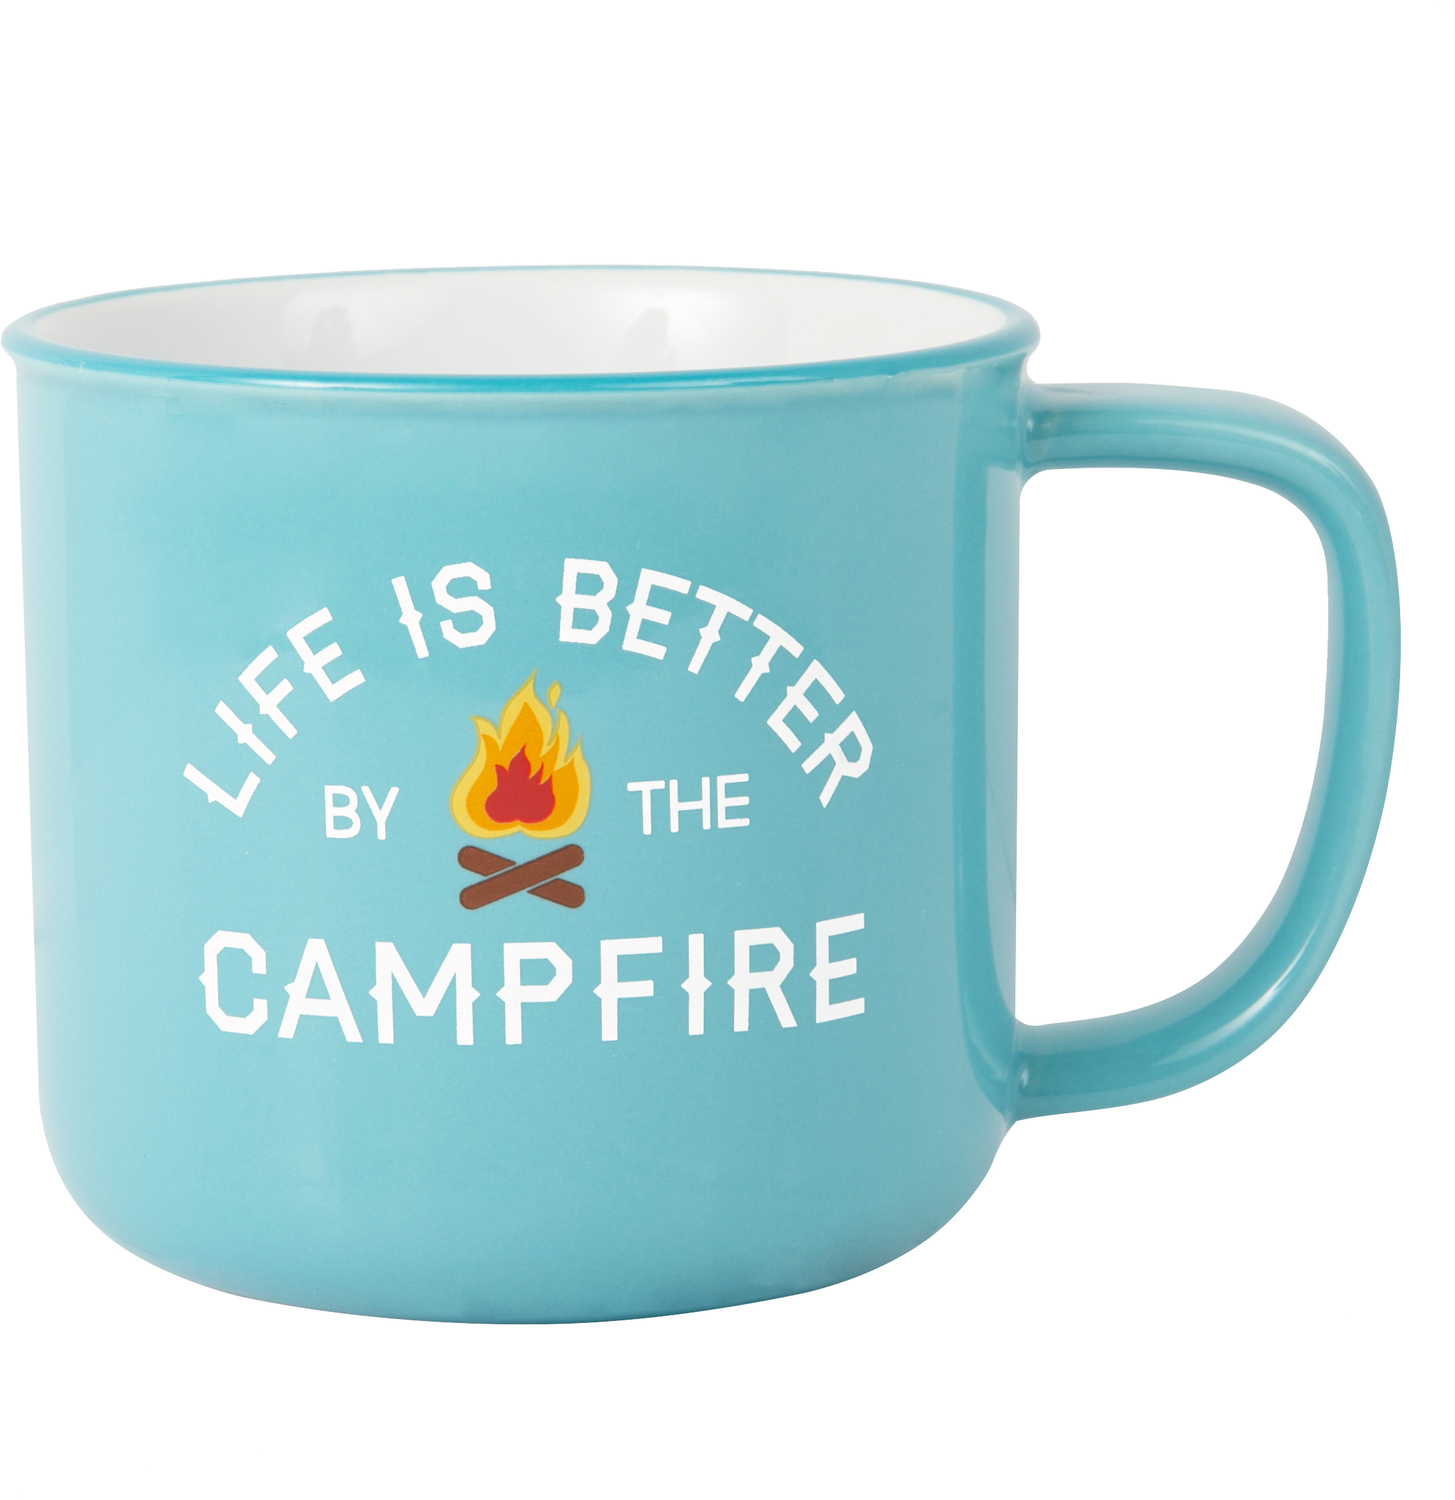 Campfire by We People - Campfire - 17 oz Mug